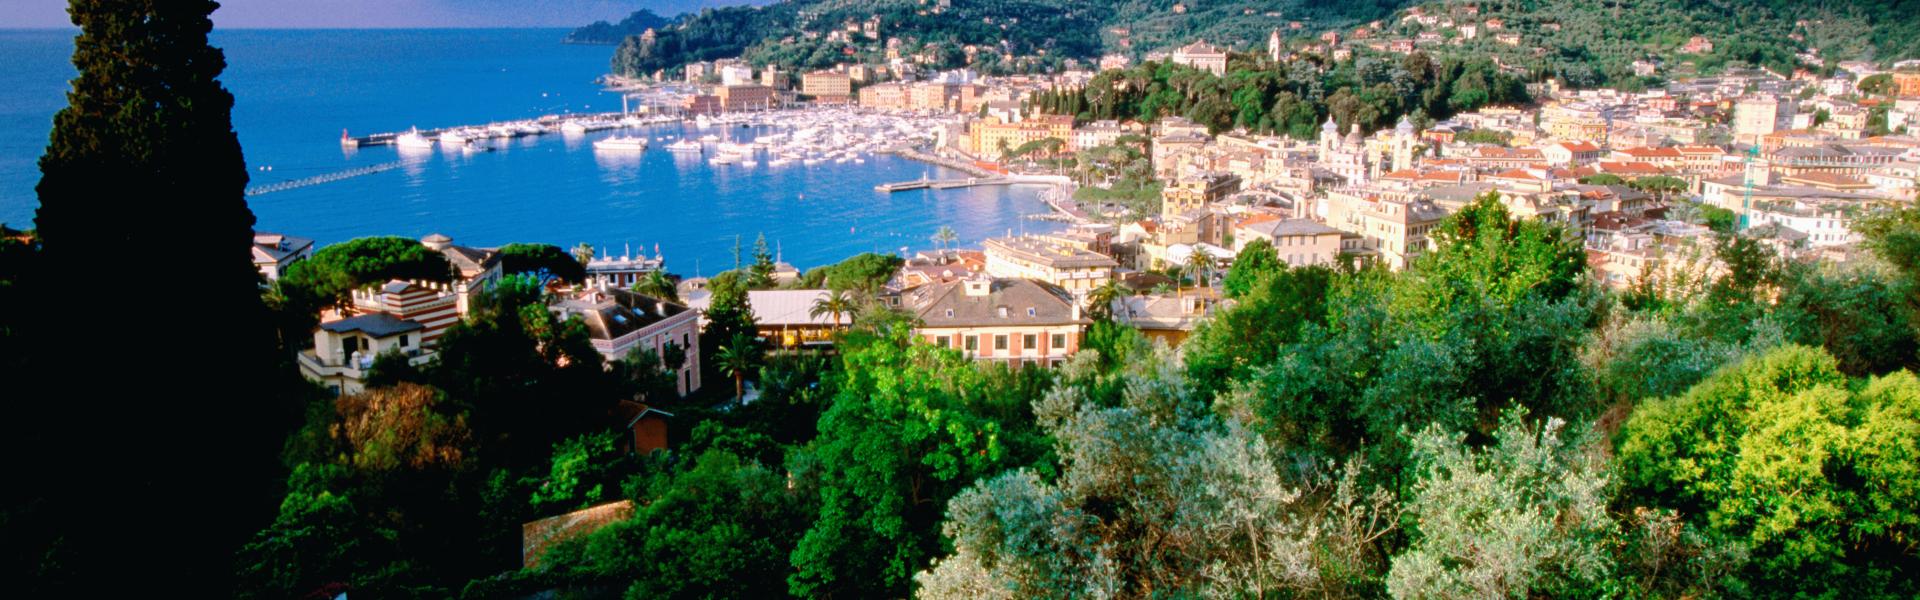 Santa Margherita Ligure Scenic View